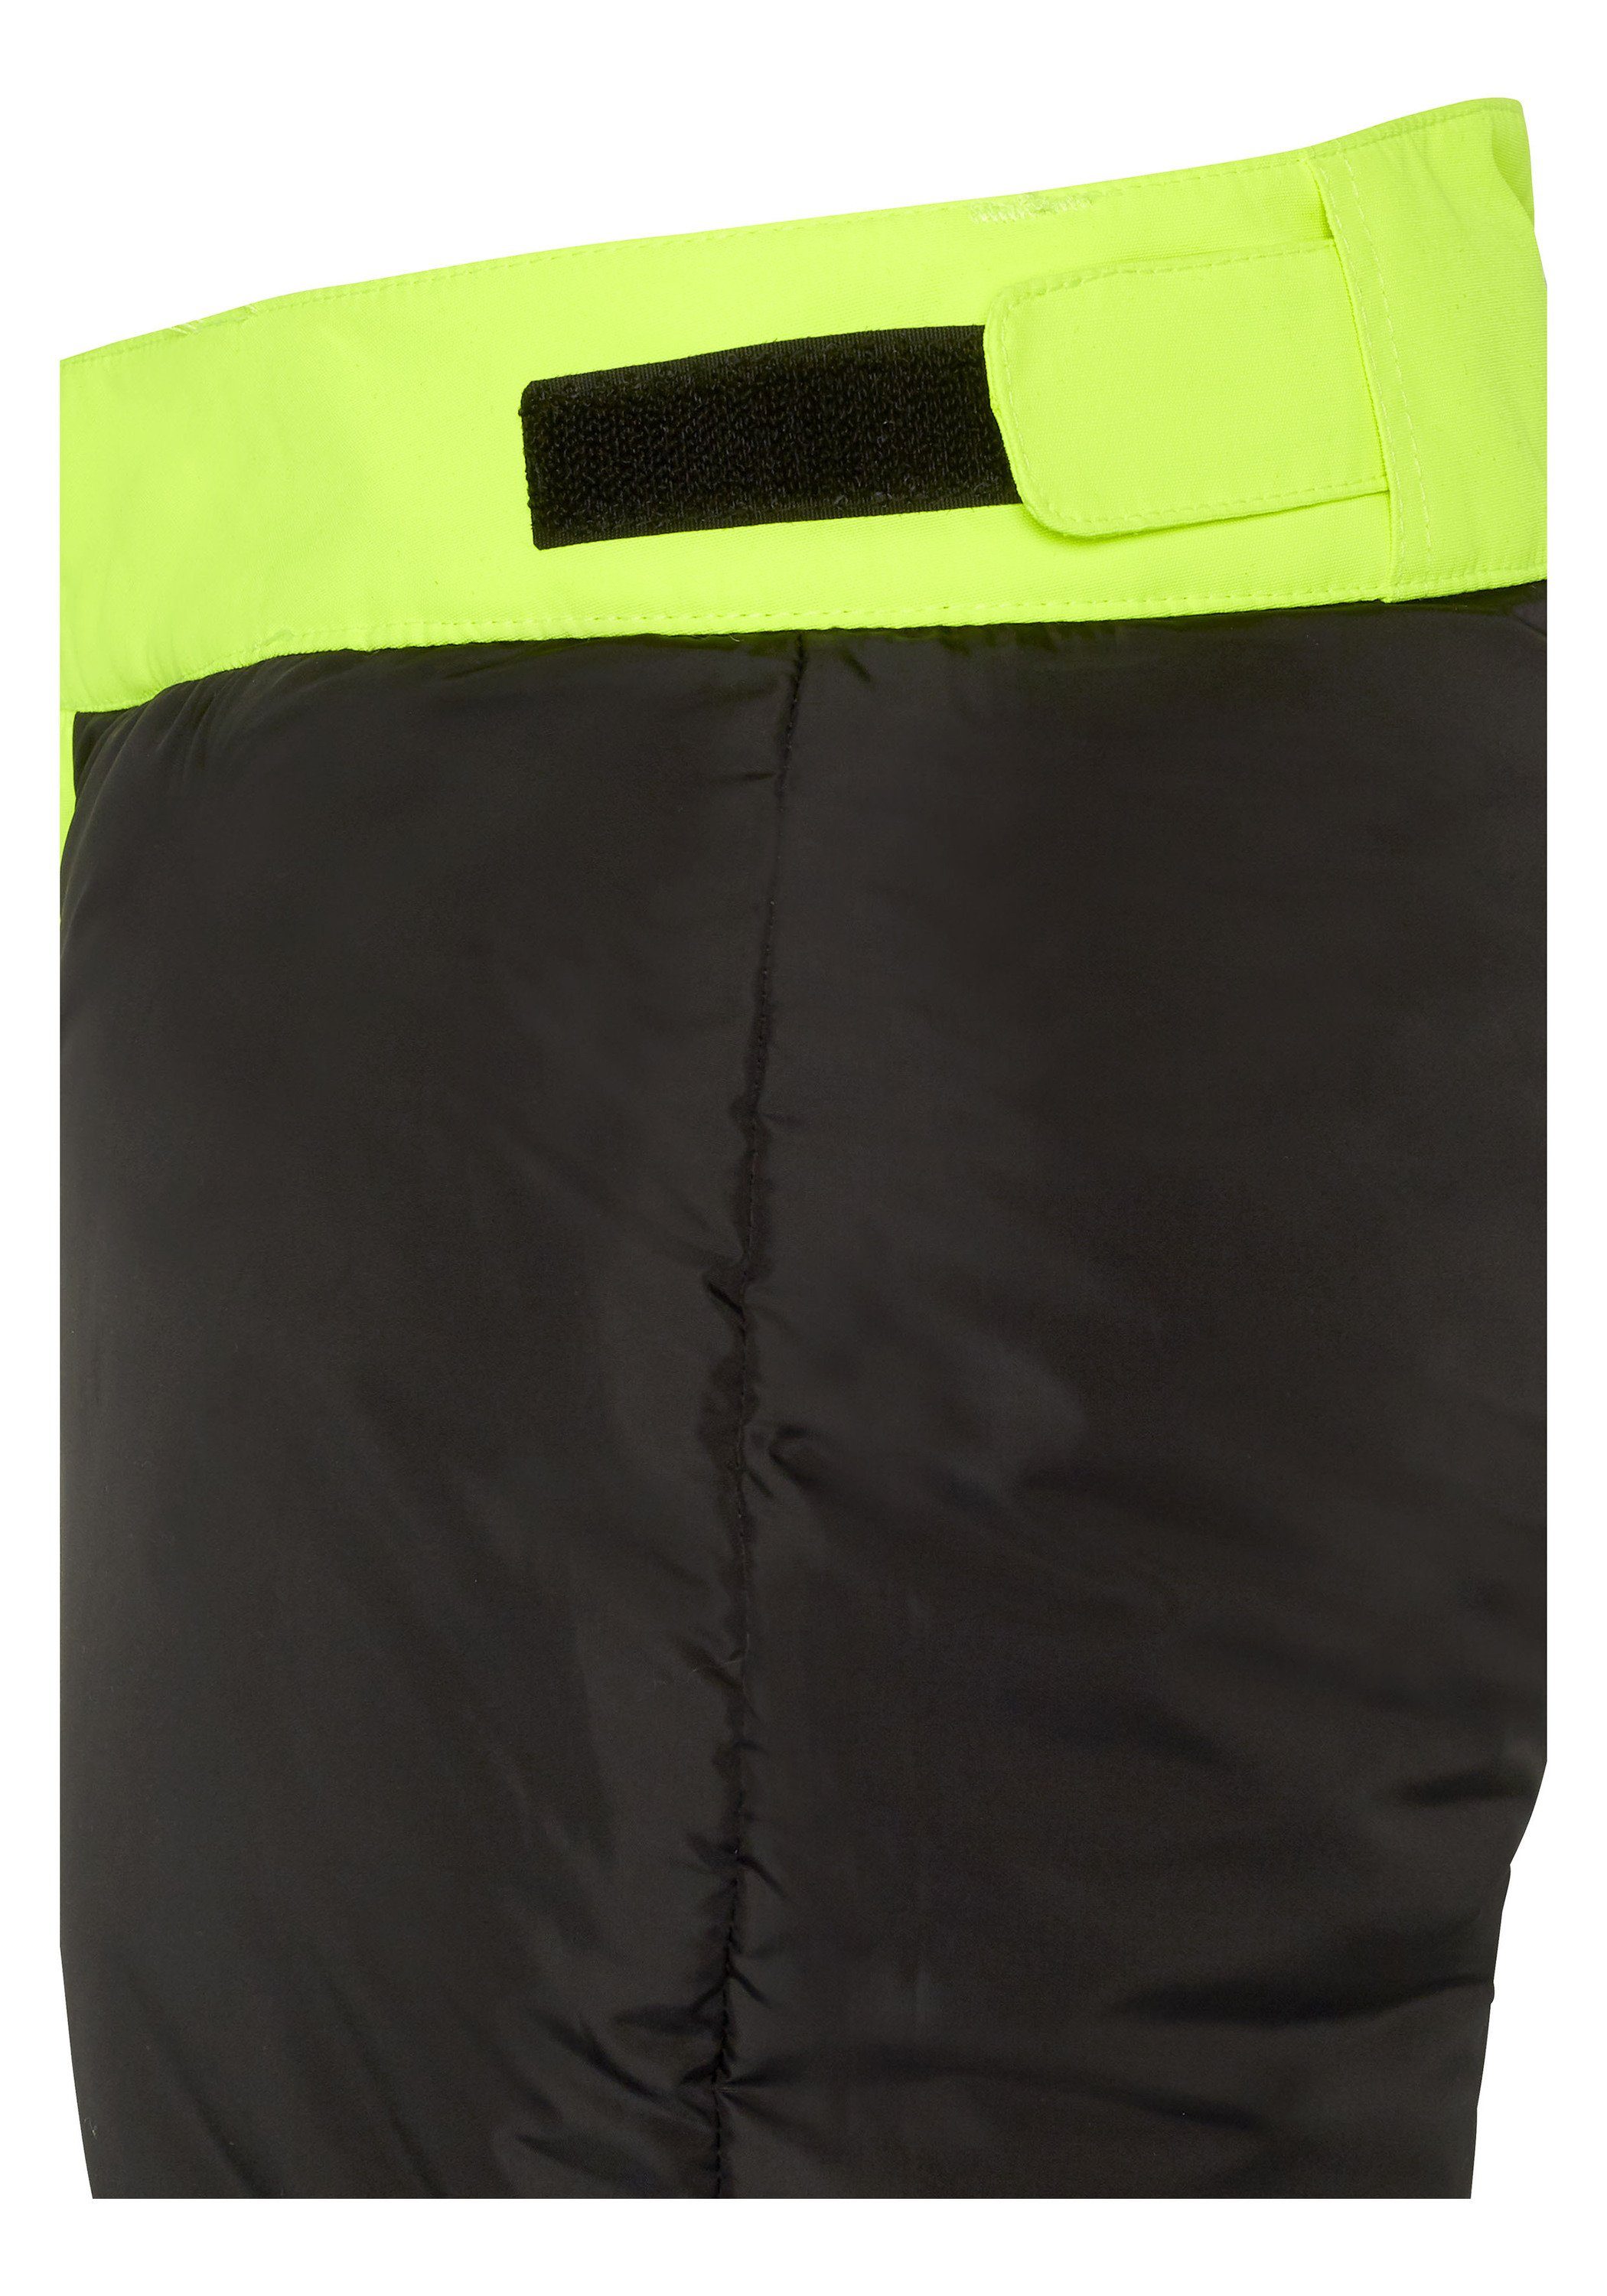 PlusMinus am Chiemsee Bein Sporthose mit Print Skihose 1 gelb